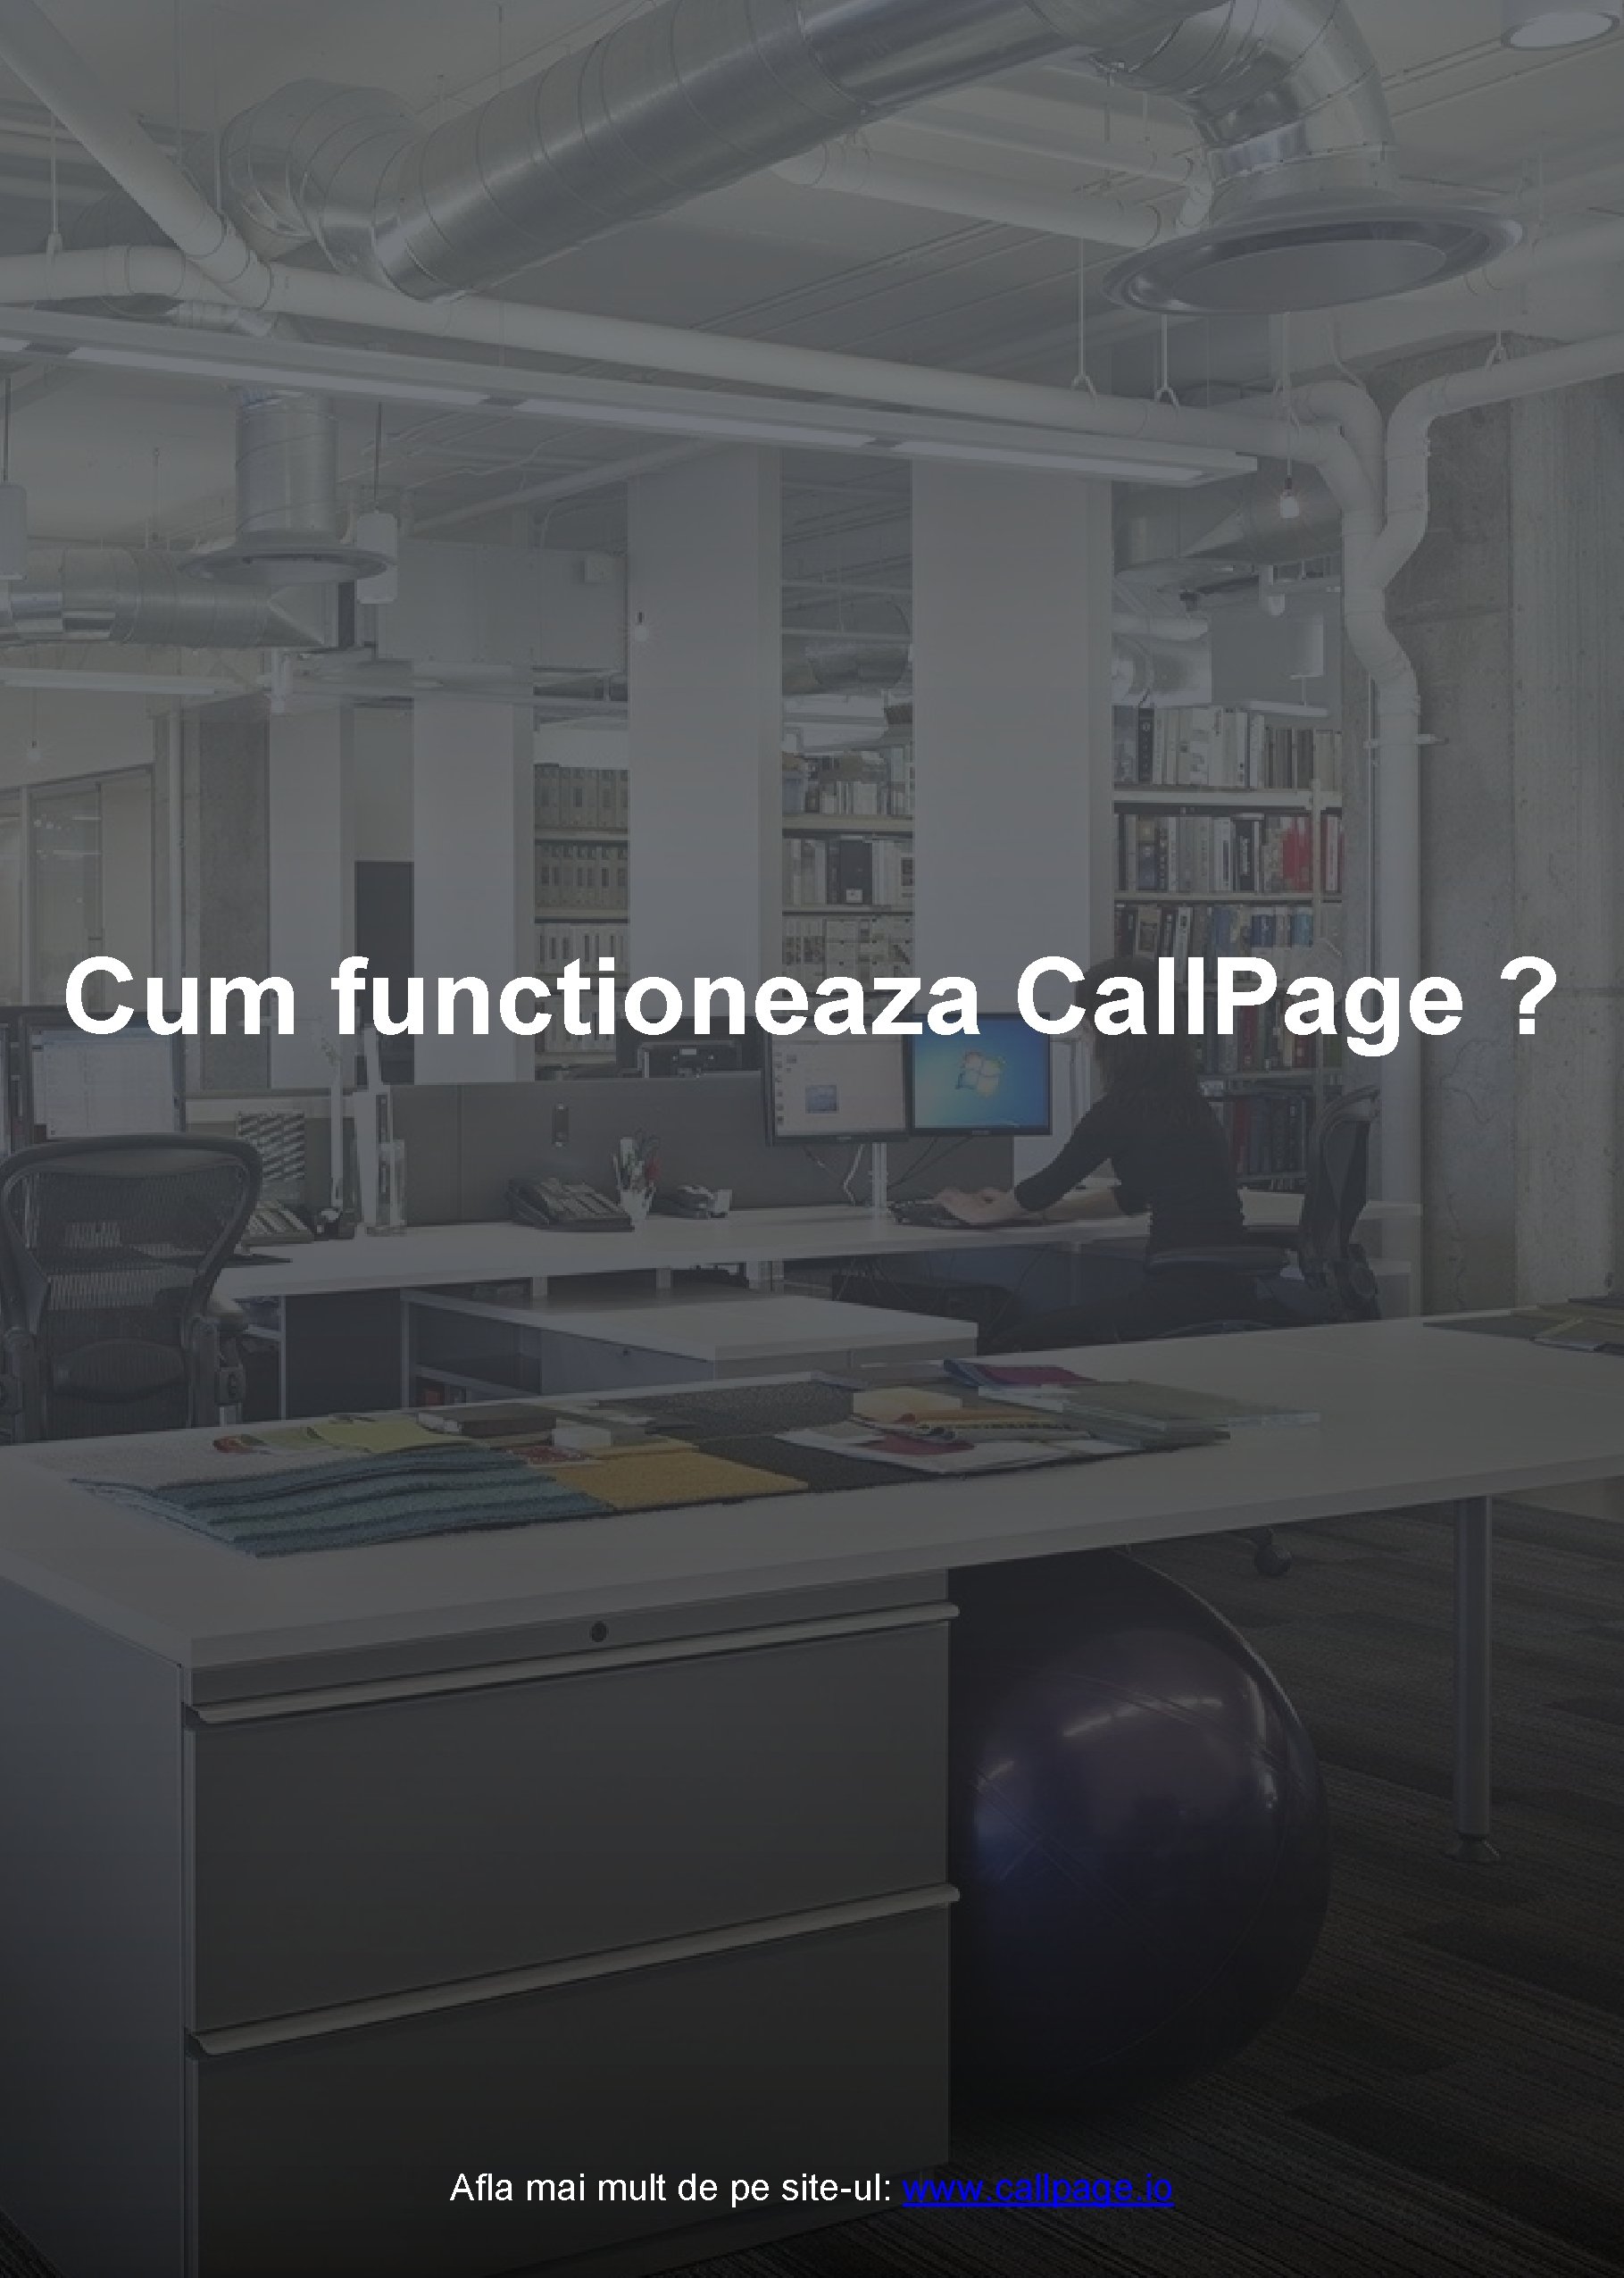 Cum functioneaza Call. Page ? Afla mai mult de pe site-ul: www. callpage. io